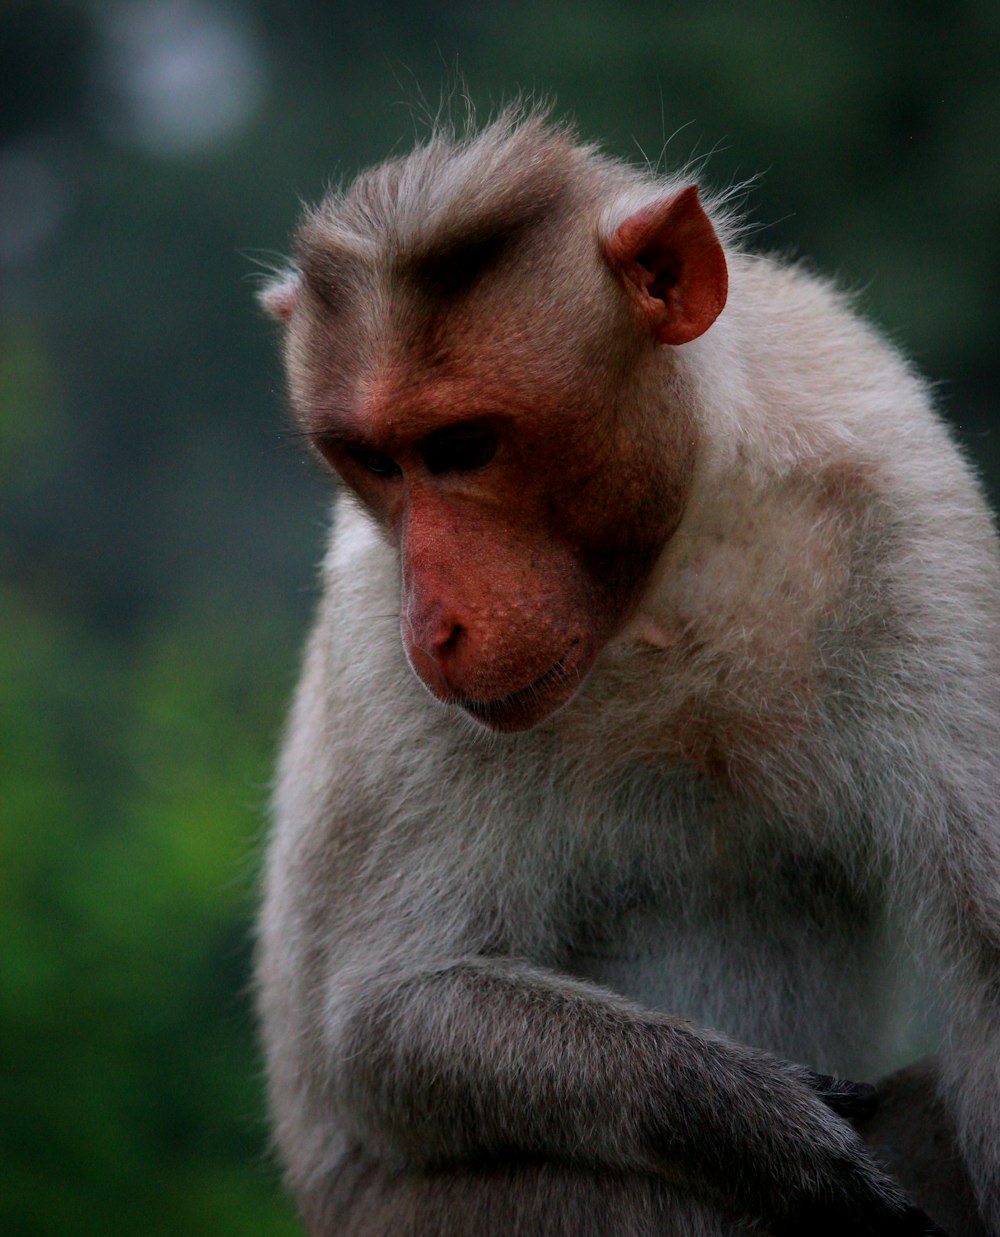 a monkey with a sad face